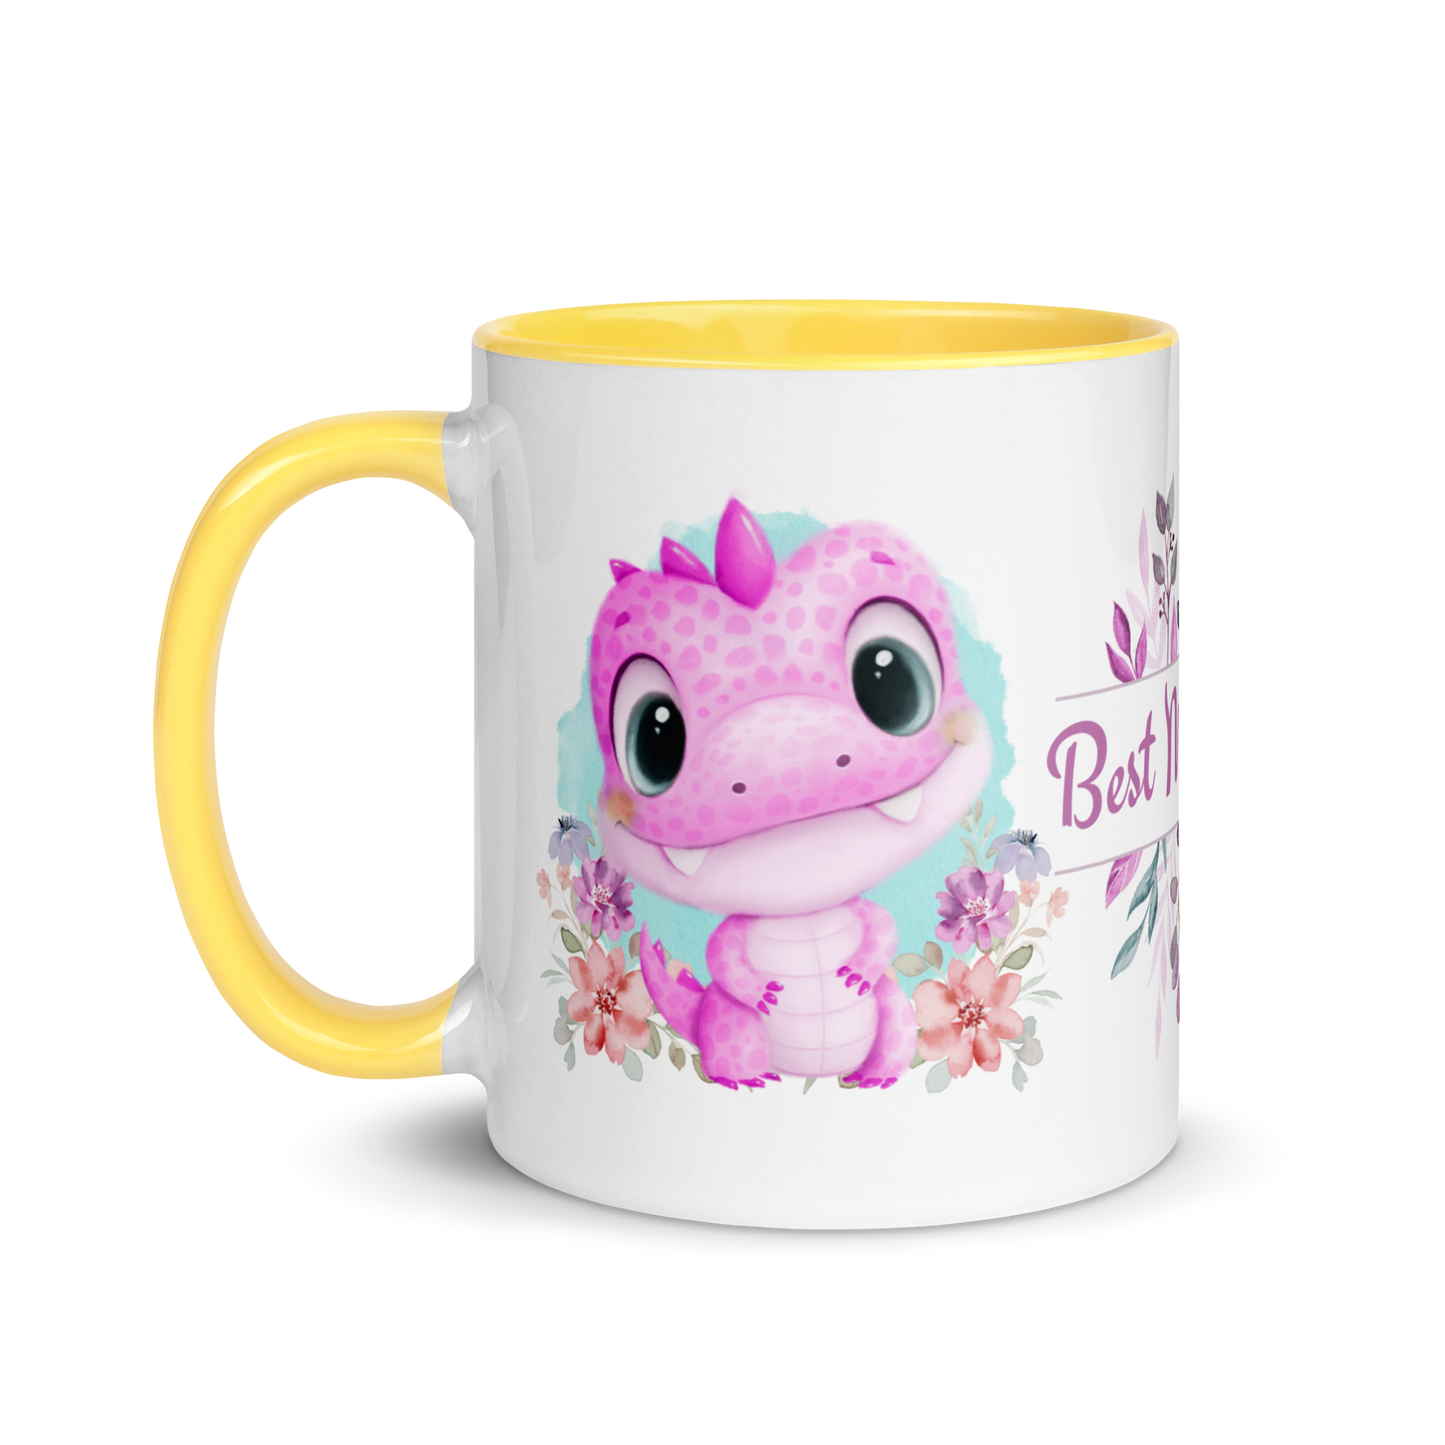 Accent Coffee Mug 11oz | Cute Pink Dinosaur Floral Best Mom Ever